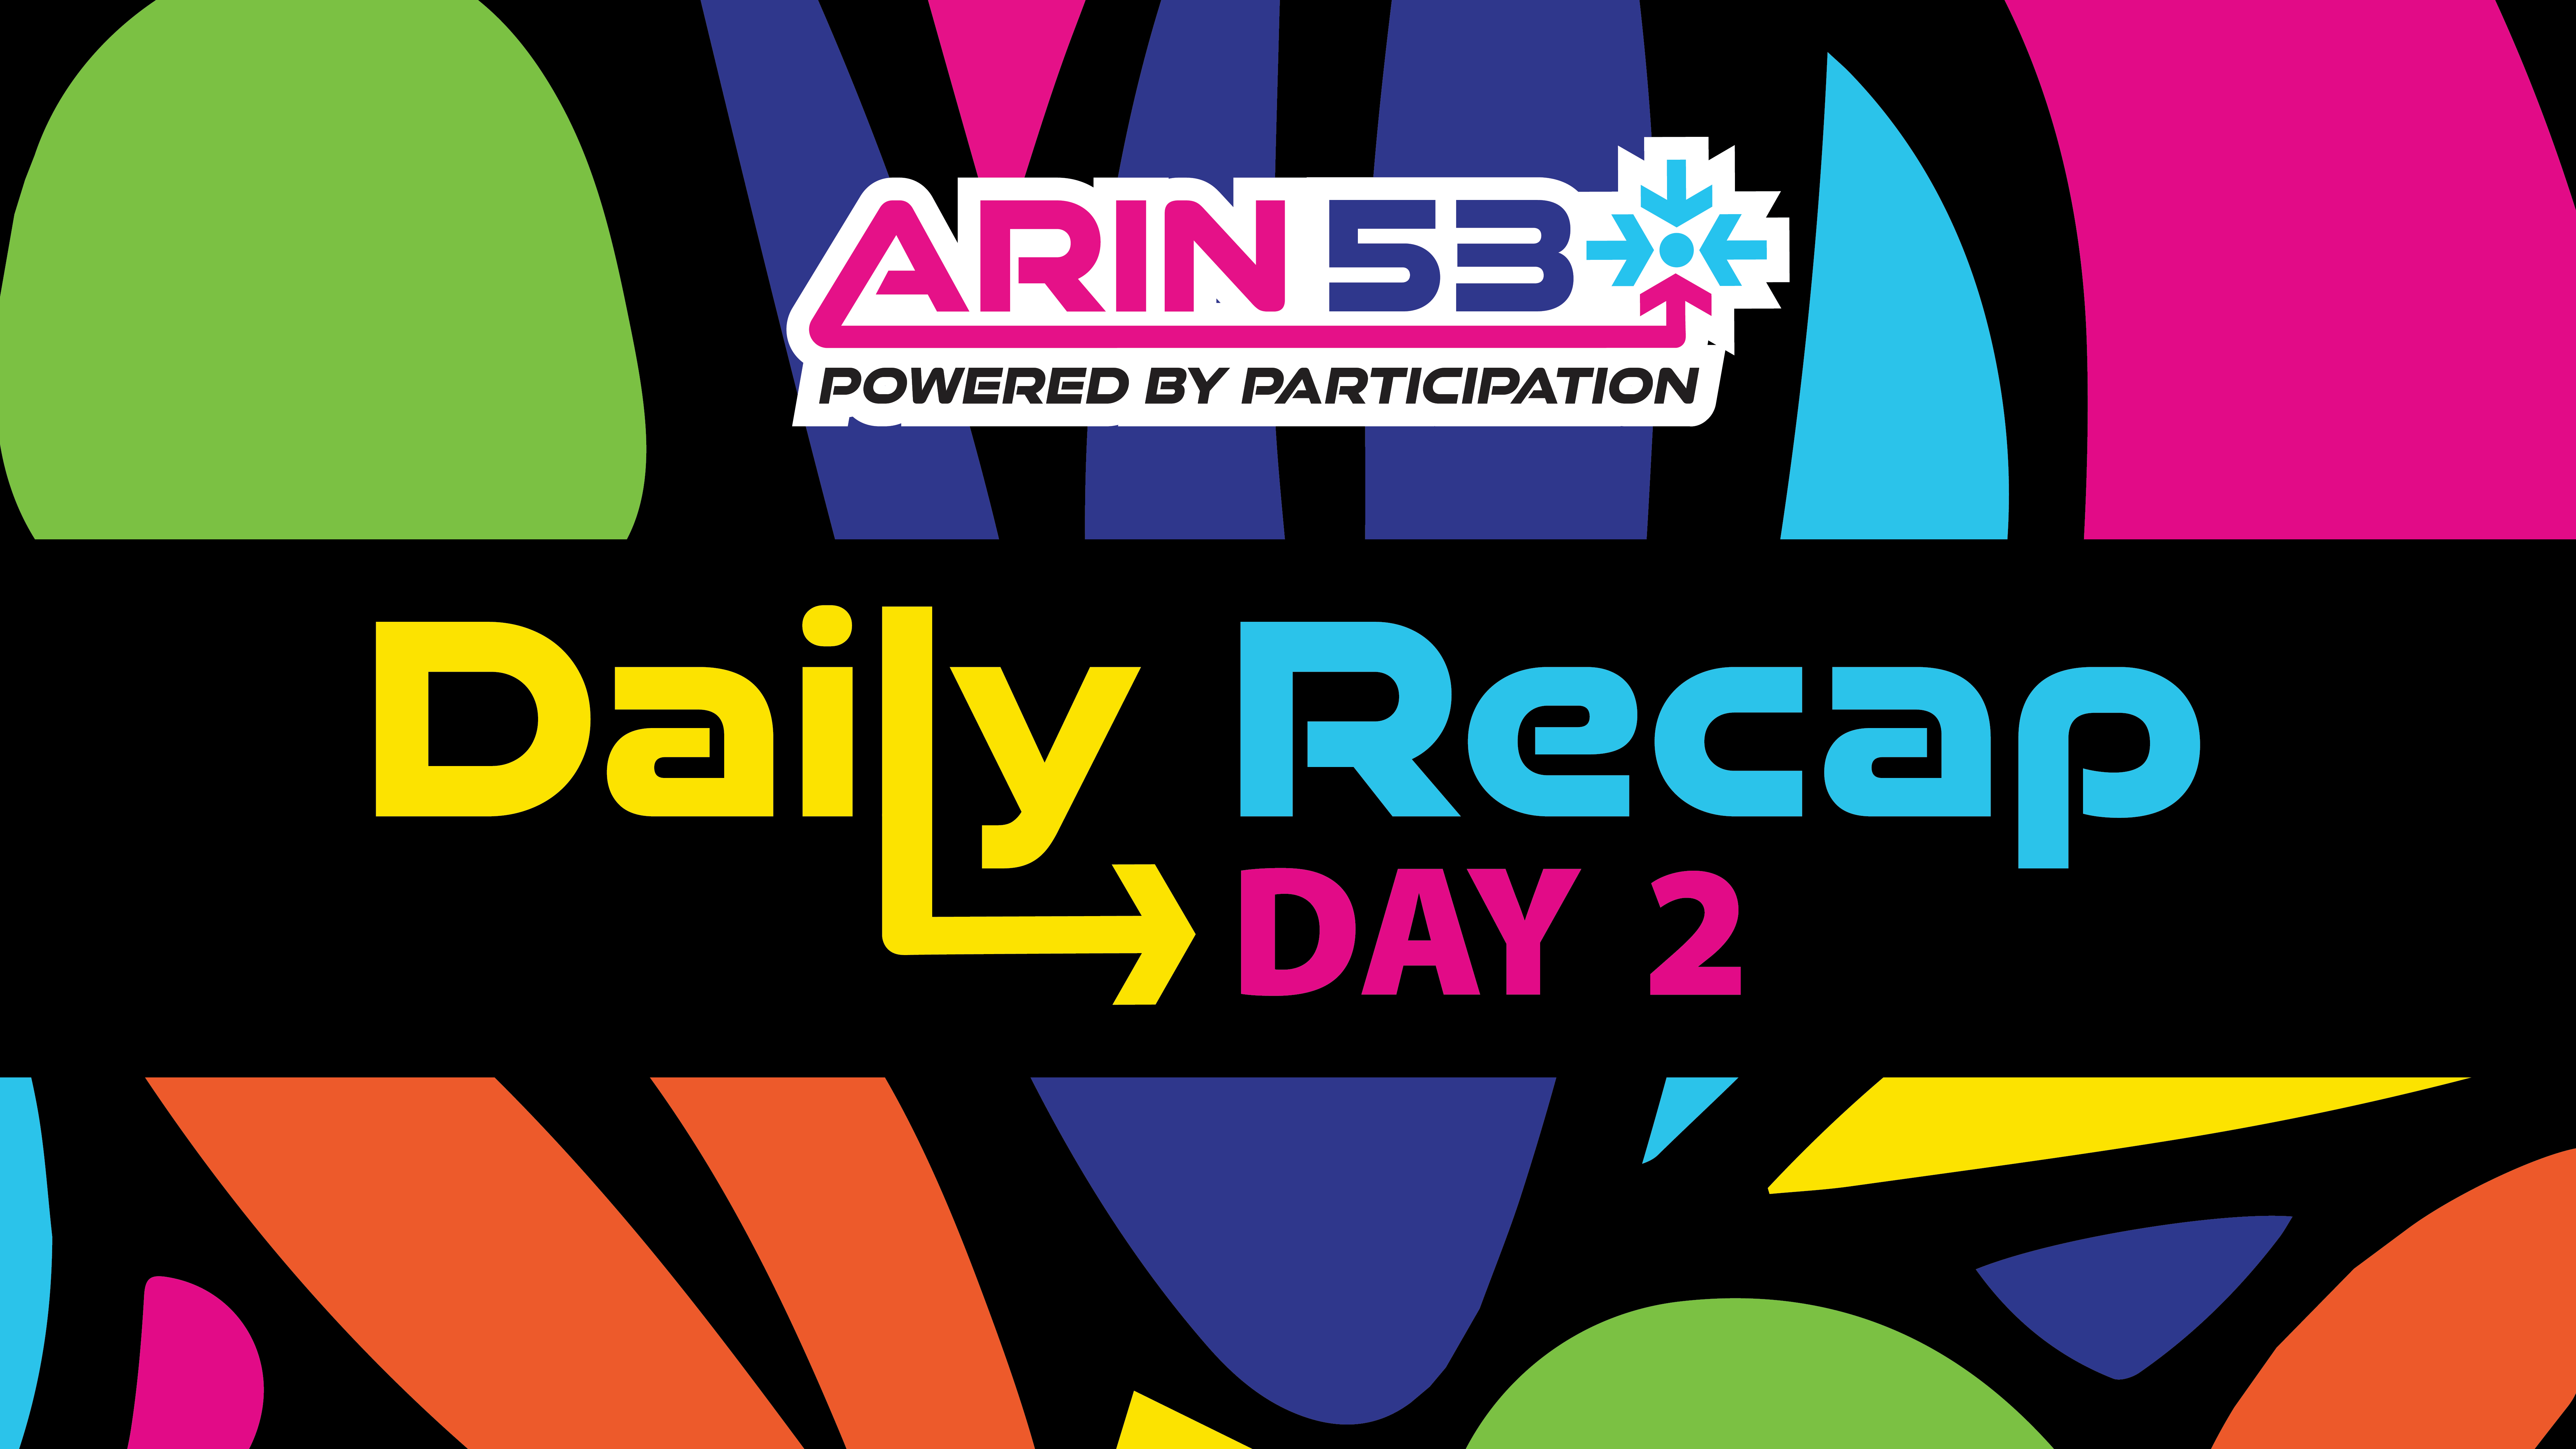 Read the blog ARIN 53 Day 2 Recap